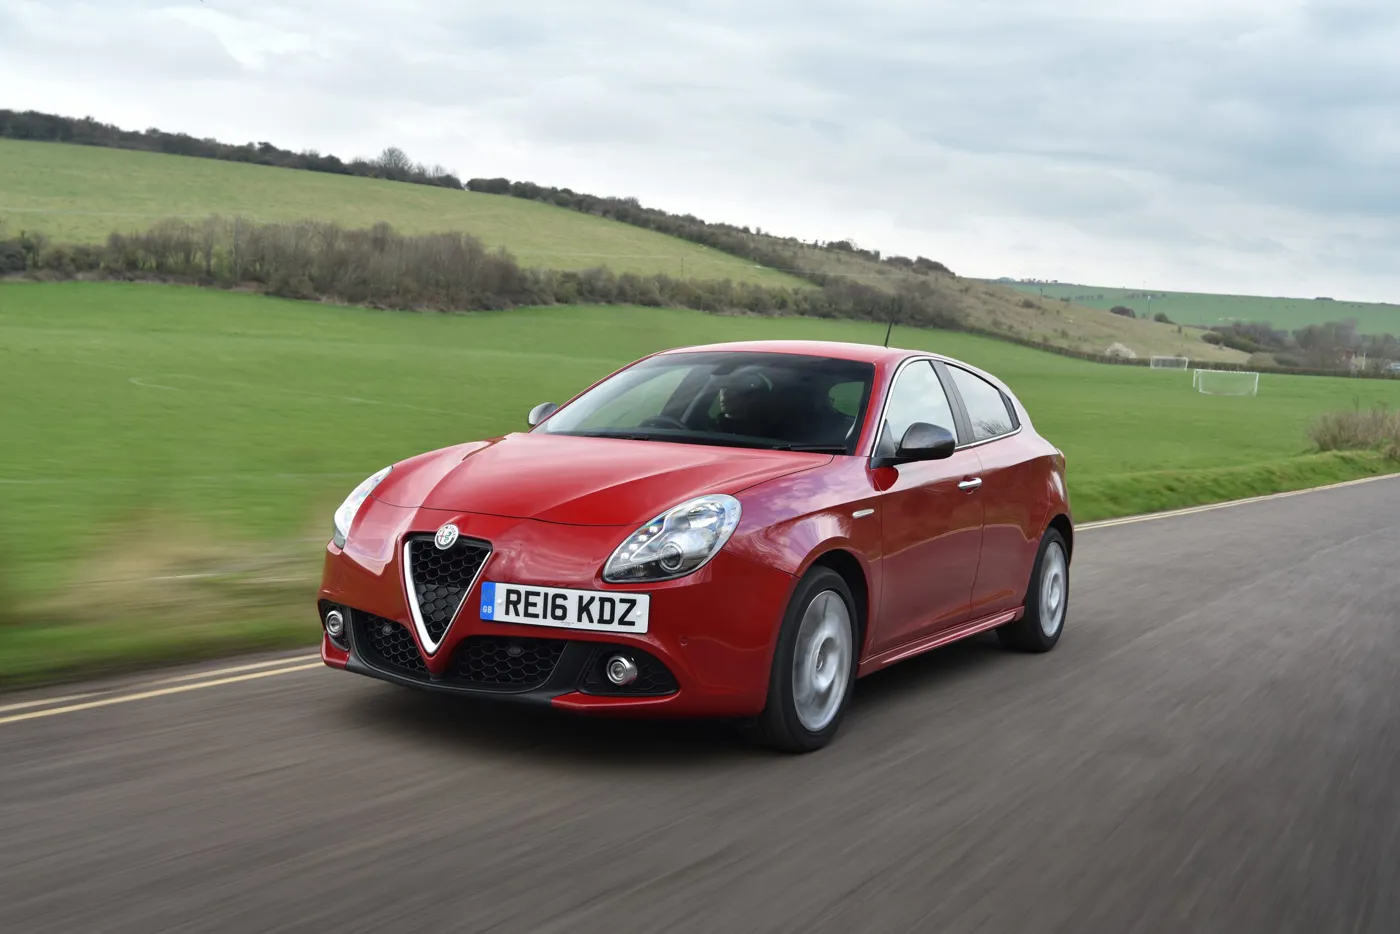 Road test: Alfa Romeo Giulietta 1.6 JTDM company car review